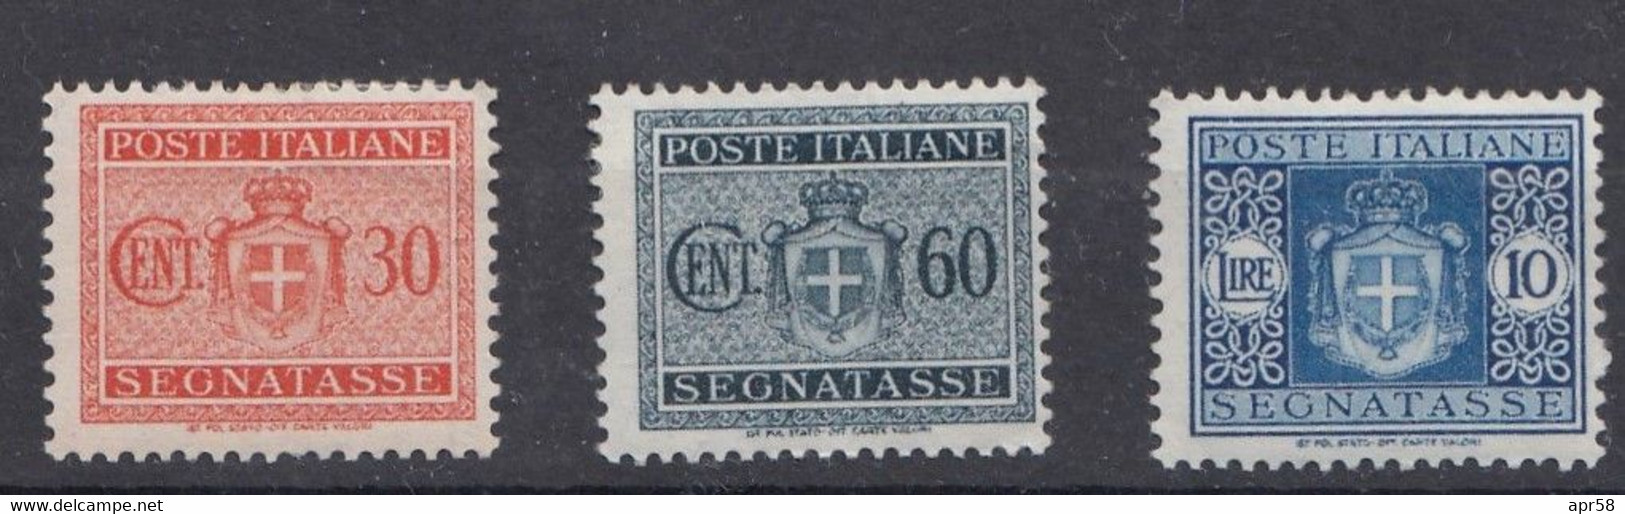 1945 Segnatasse    Sass77-30c-sass-80-60c-sass84-10li - Postage Due